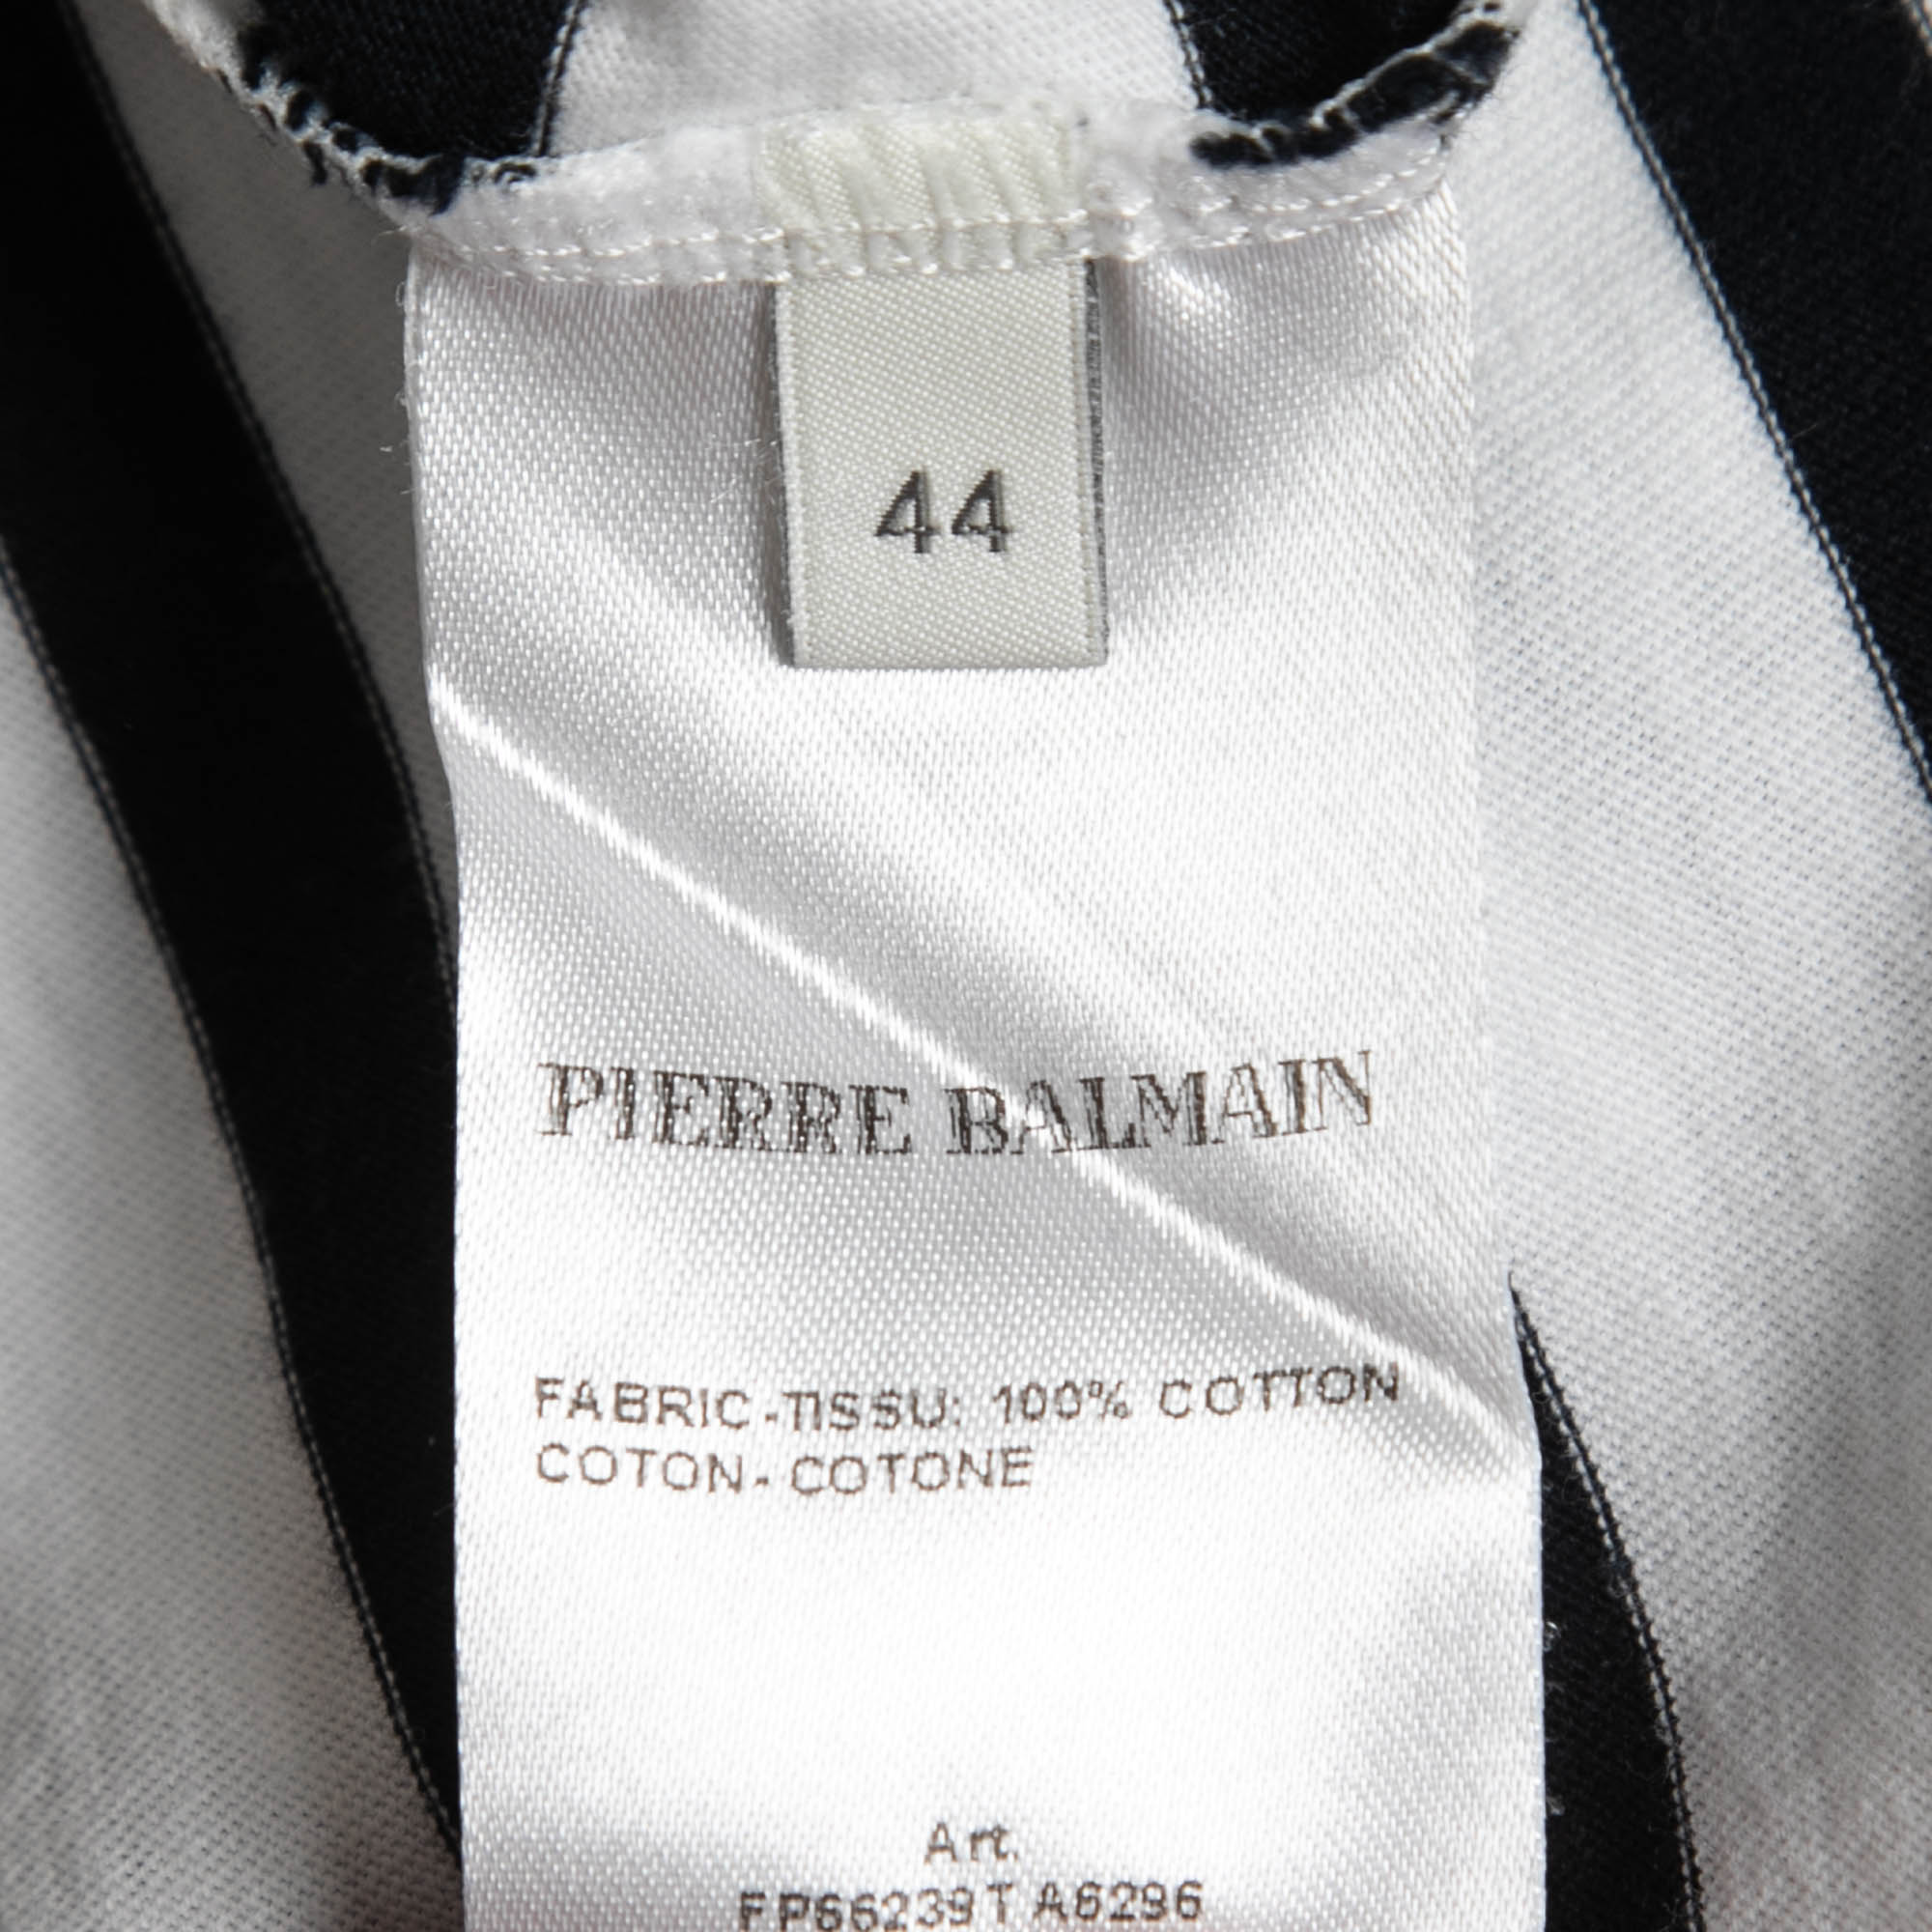 Pierre Balmain White/Navy Blue Striped Cotton Button Embellished Sleeveless T-Shirt L